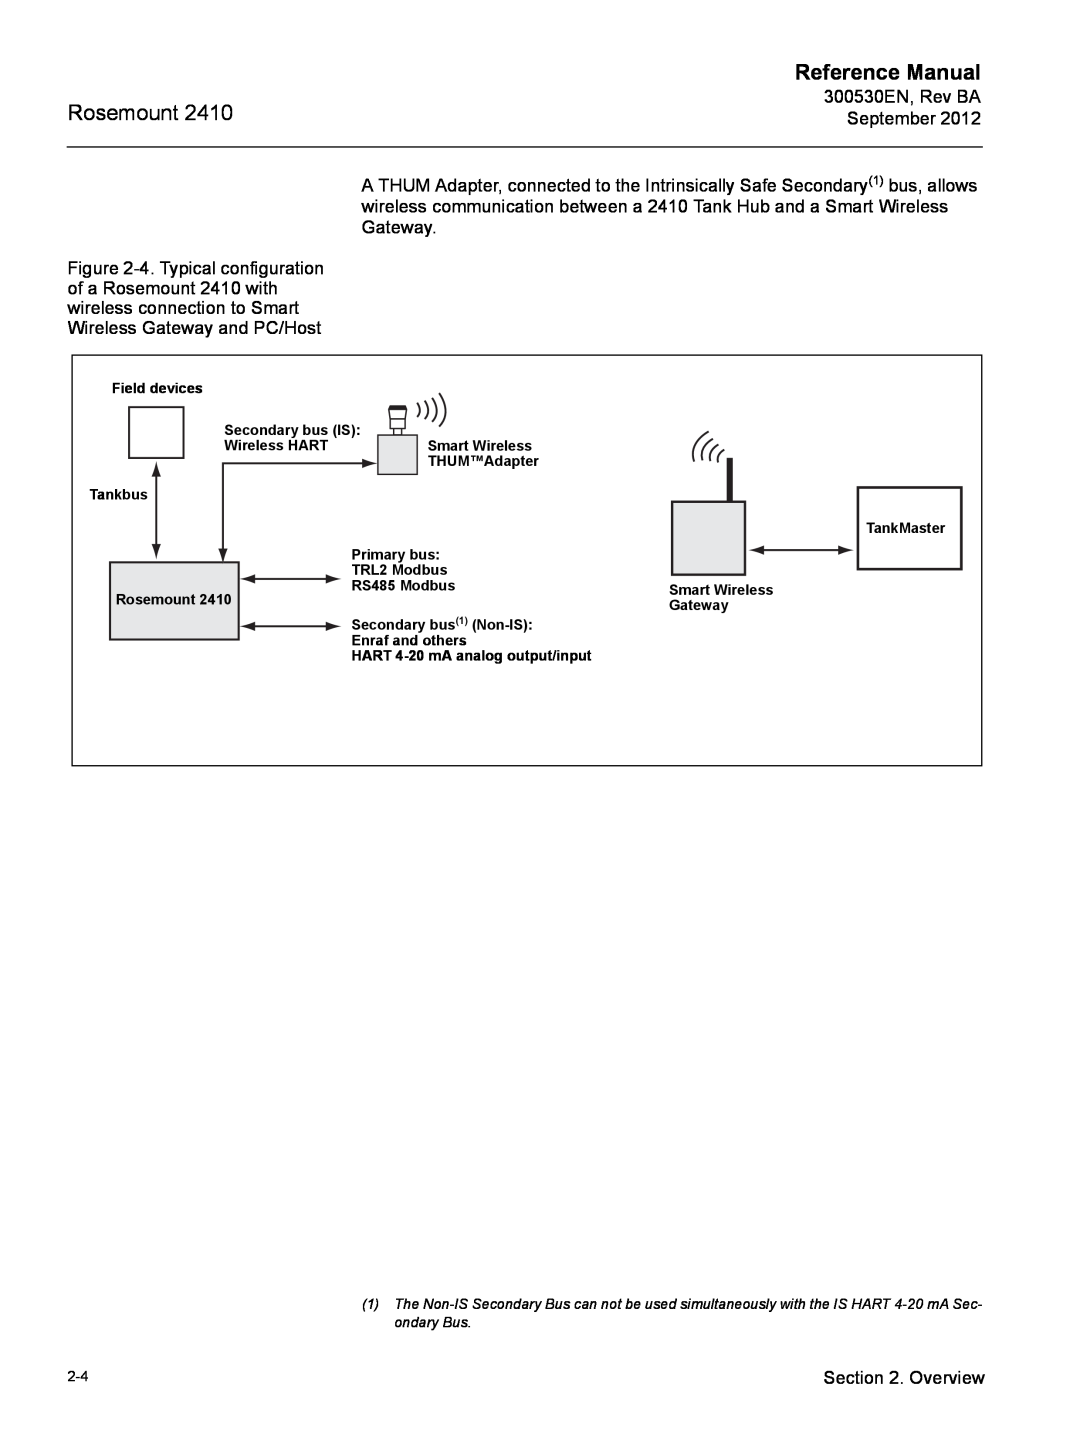 Emerson Process Management Rosemount 2410 manual Reference Manual, Smart Wireless, THUMAdapter 